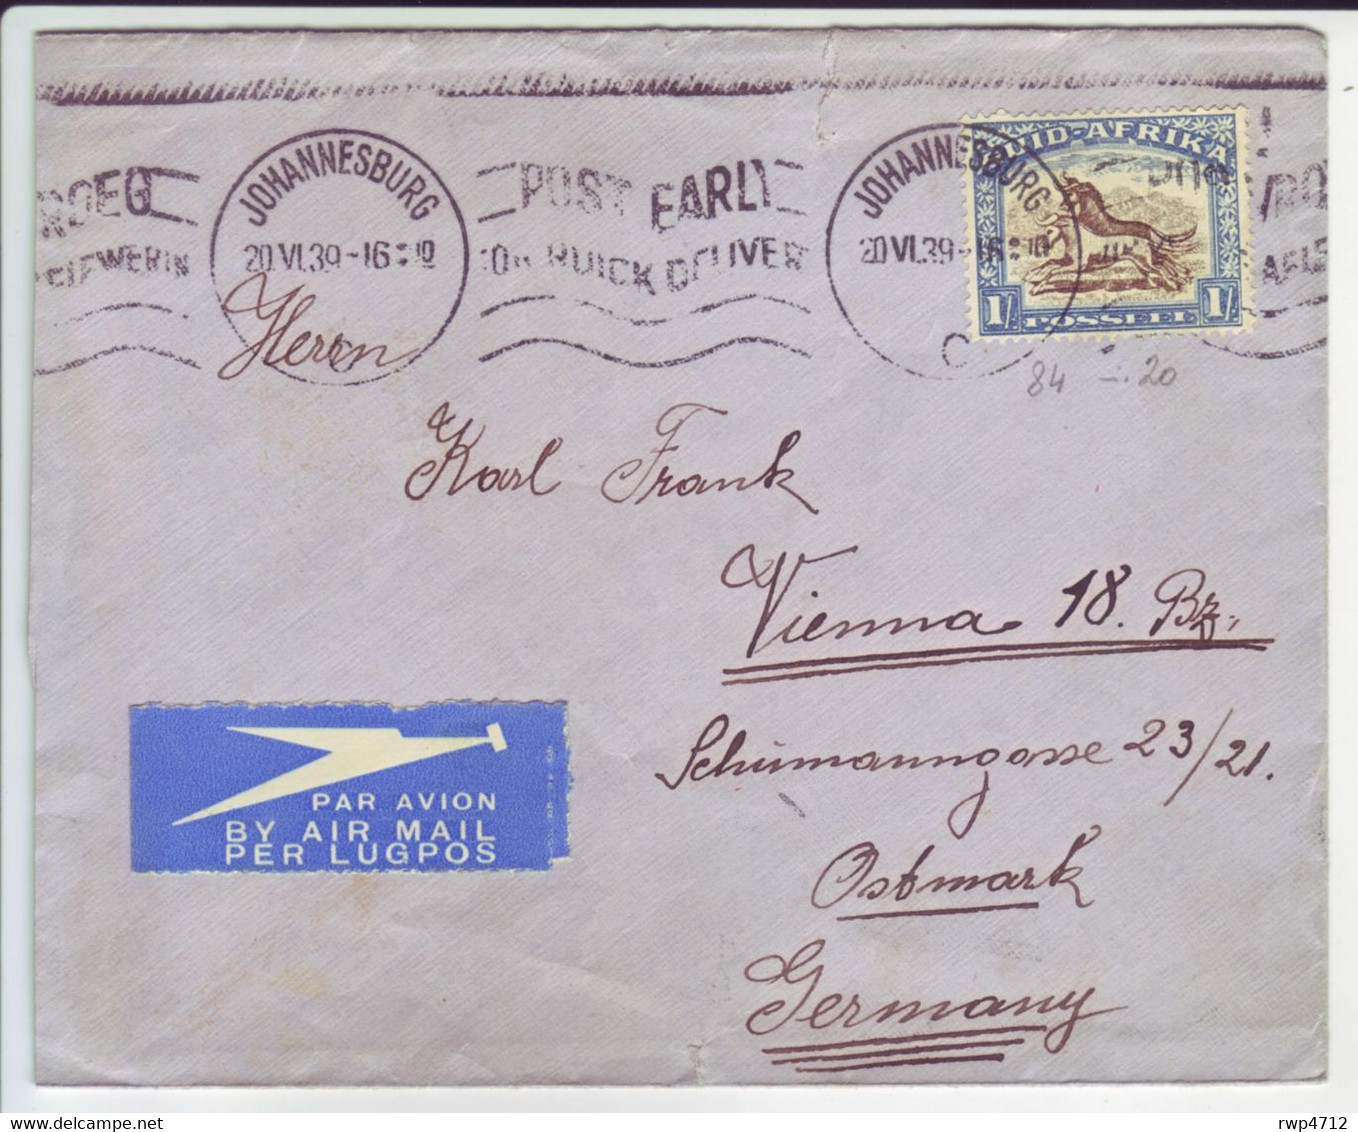 SOUTH AFRICA   Luftpostbrief  Airmail Cover Lettre Par Avion 1939 Via Athen To Austria - Luftpost